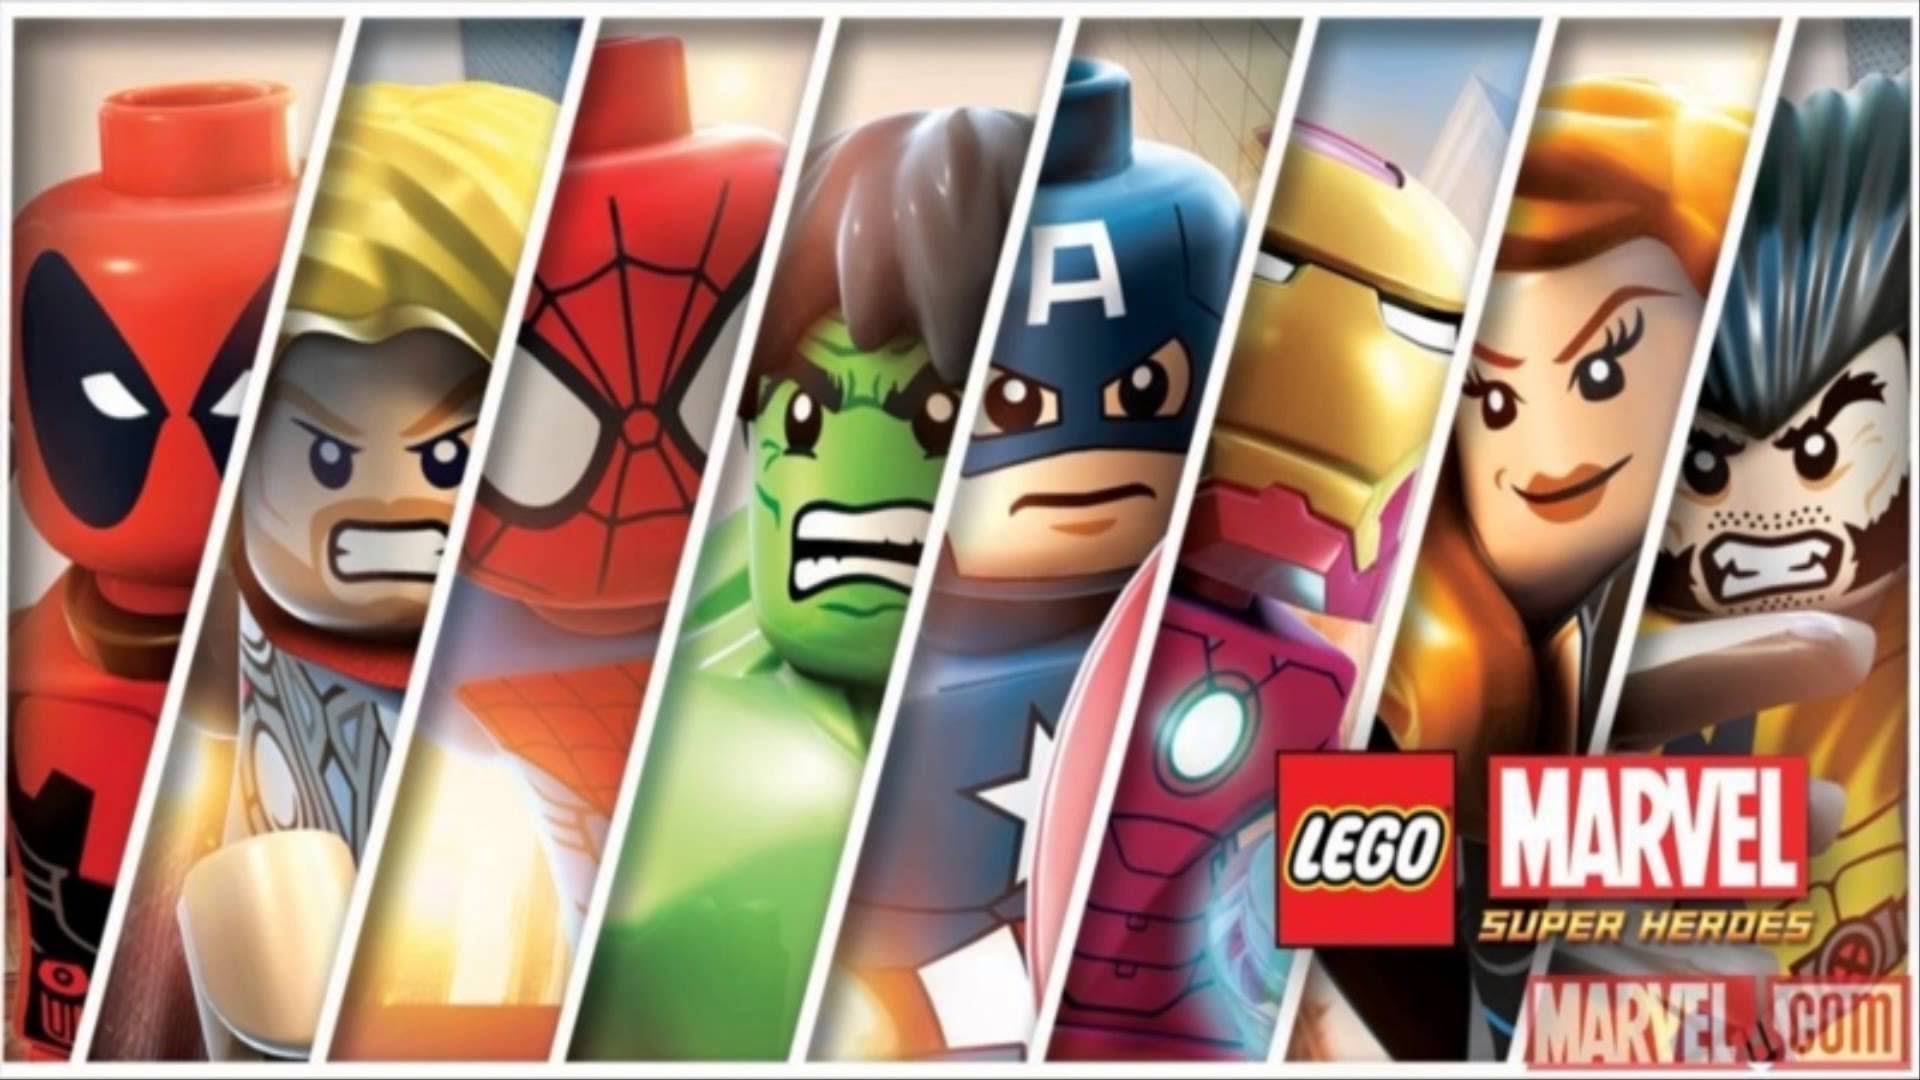 Lego Marvel Super Heroes wallpaper 2